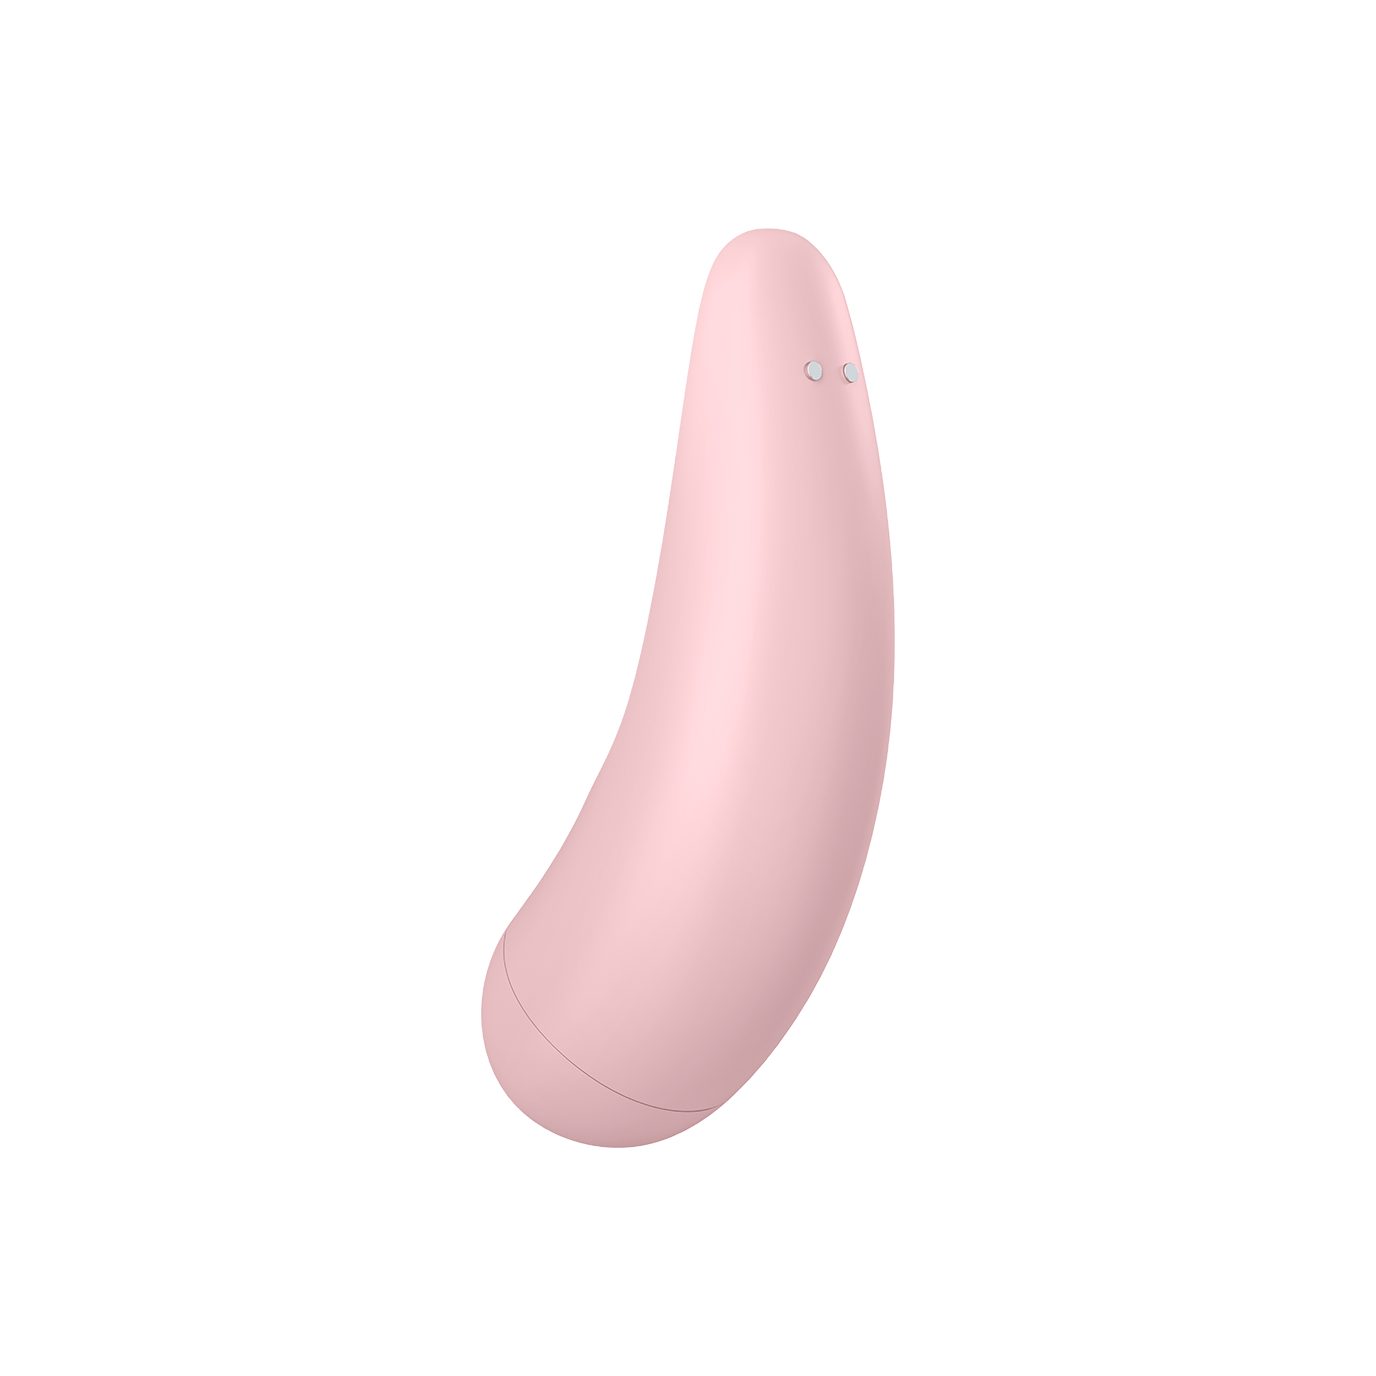 Klitoris-Stimulator App", 2 Satisfyer Satisfyer App, "Curvy 13,5cm Connect Druckwellenvibrator, mit